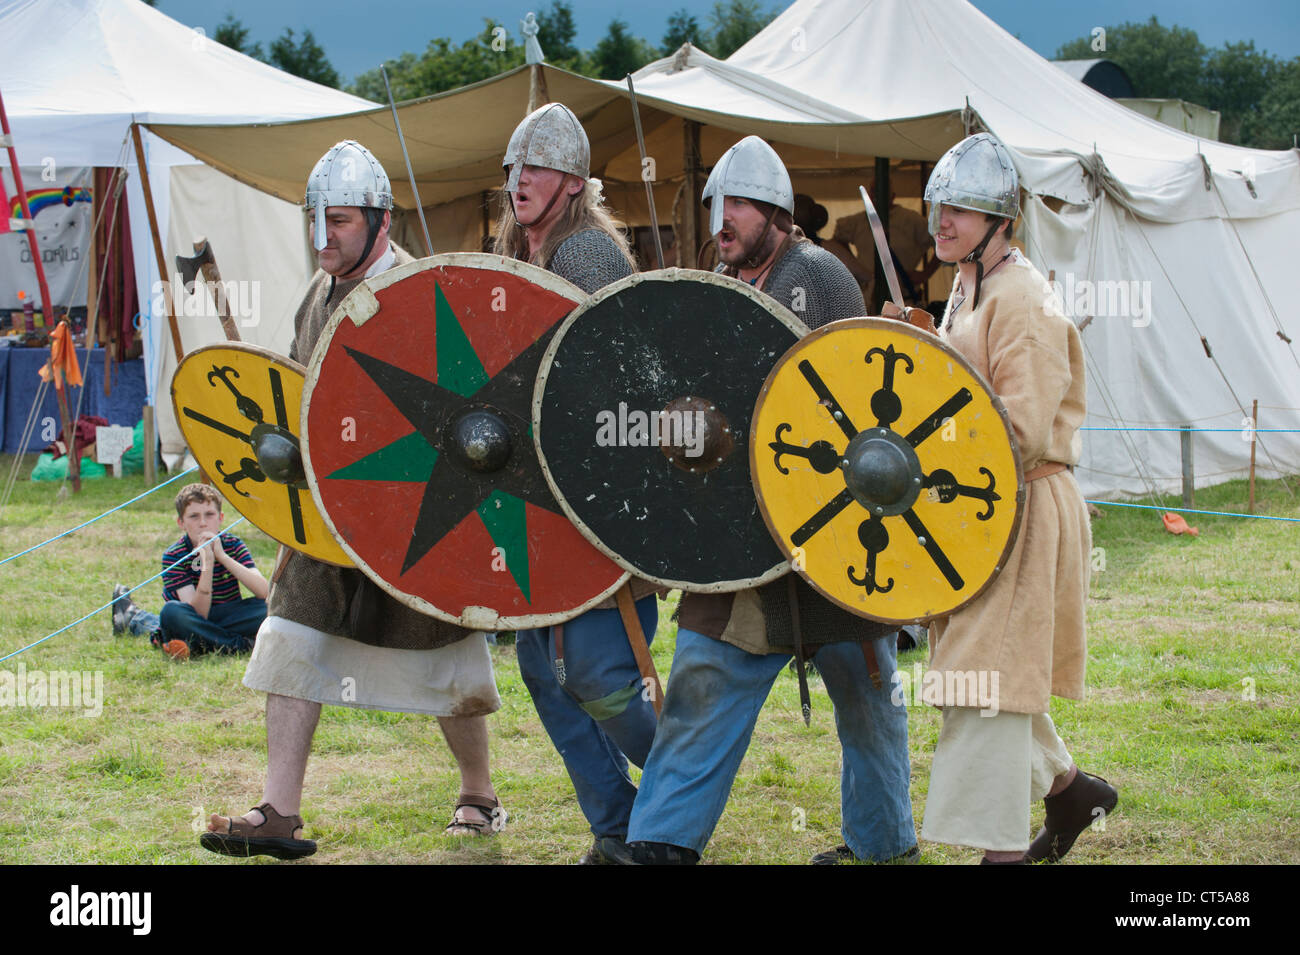 Raudr Vagur viking battle re-enactment group perform display at Chetwynd, Newport, Shropshire, July 2012. Stock Photo